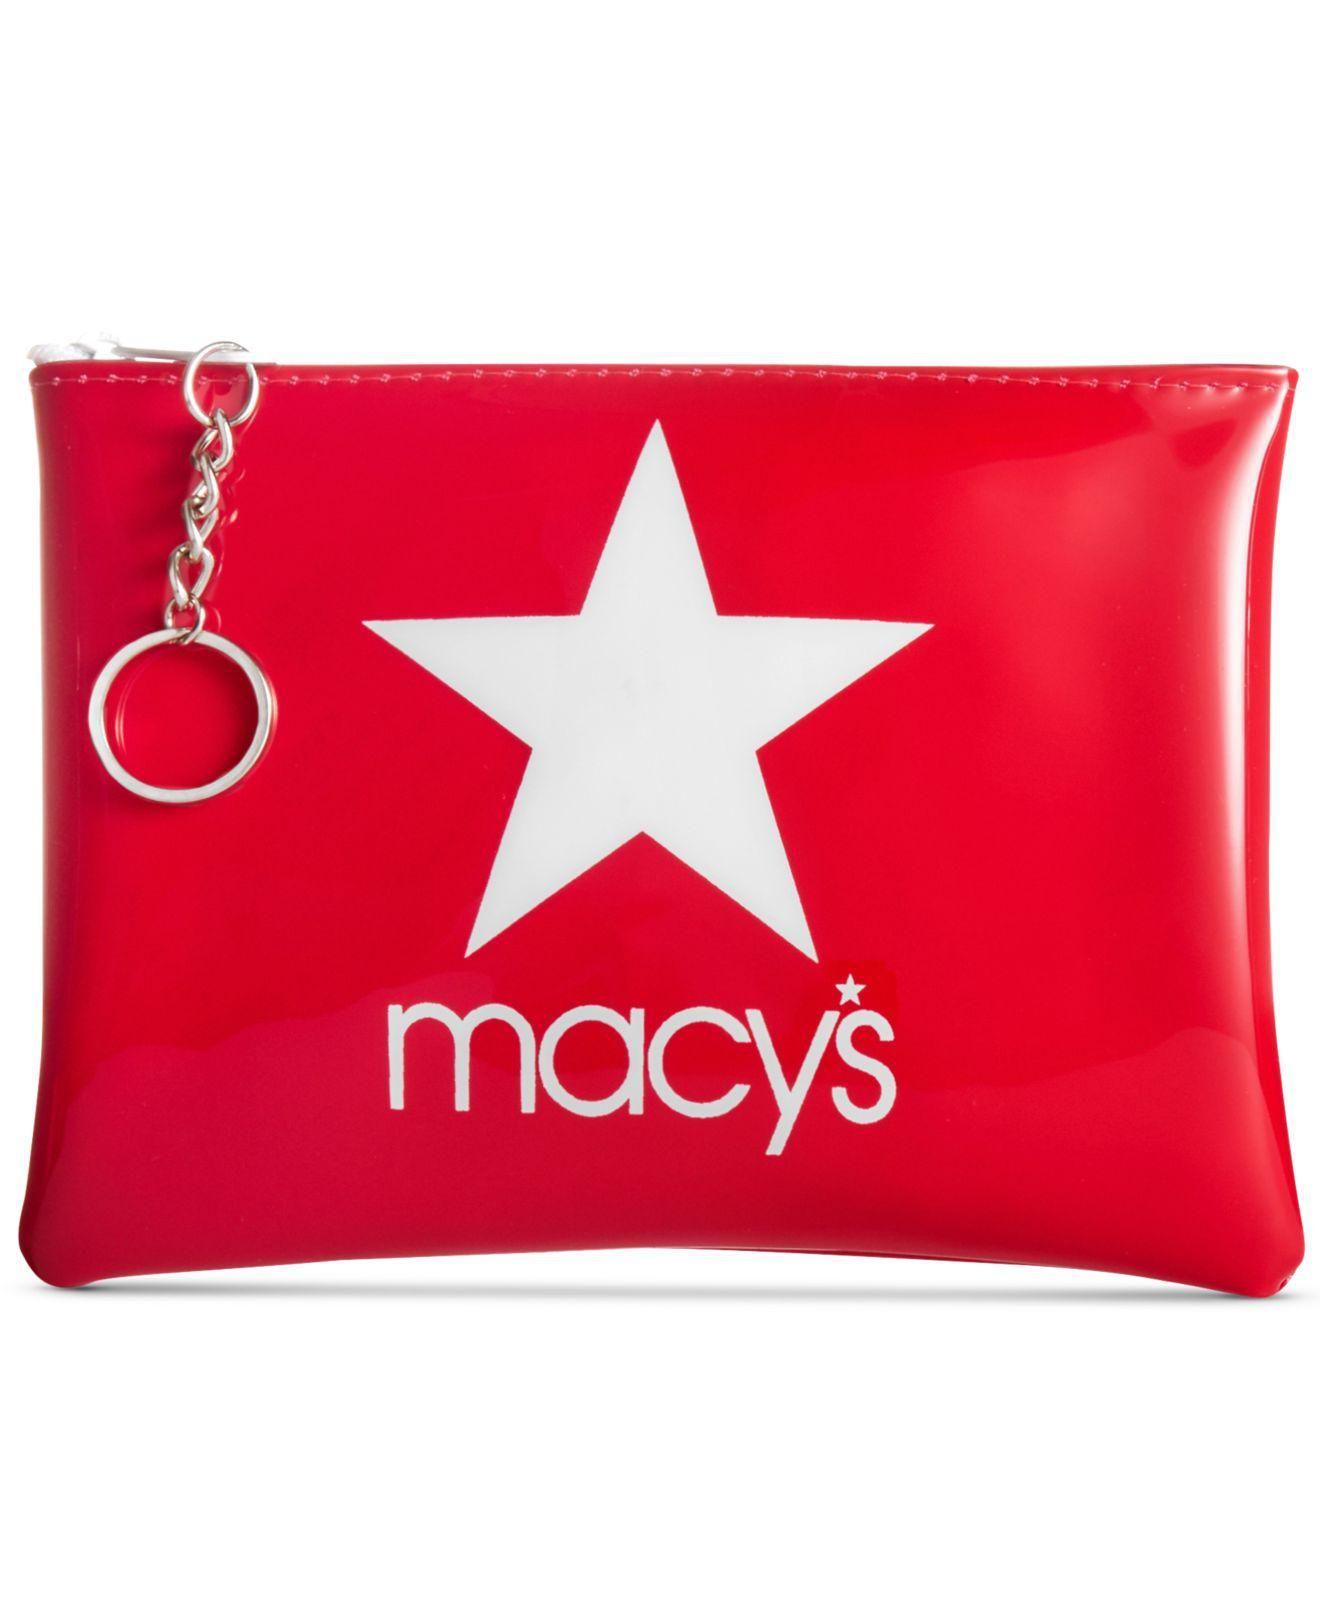 Macy's White Star Logo - Lyst - Macy's Star Pouch in Red